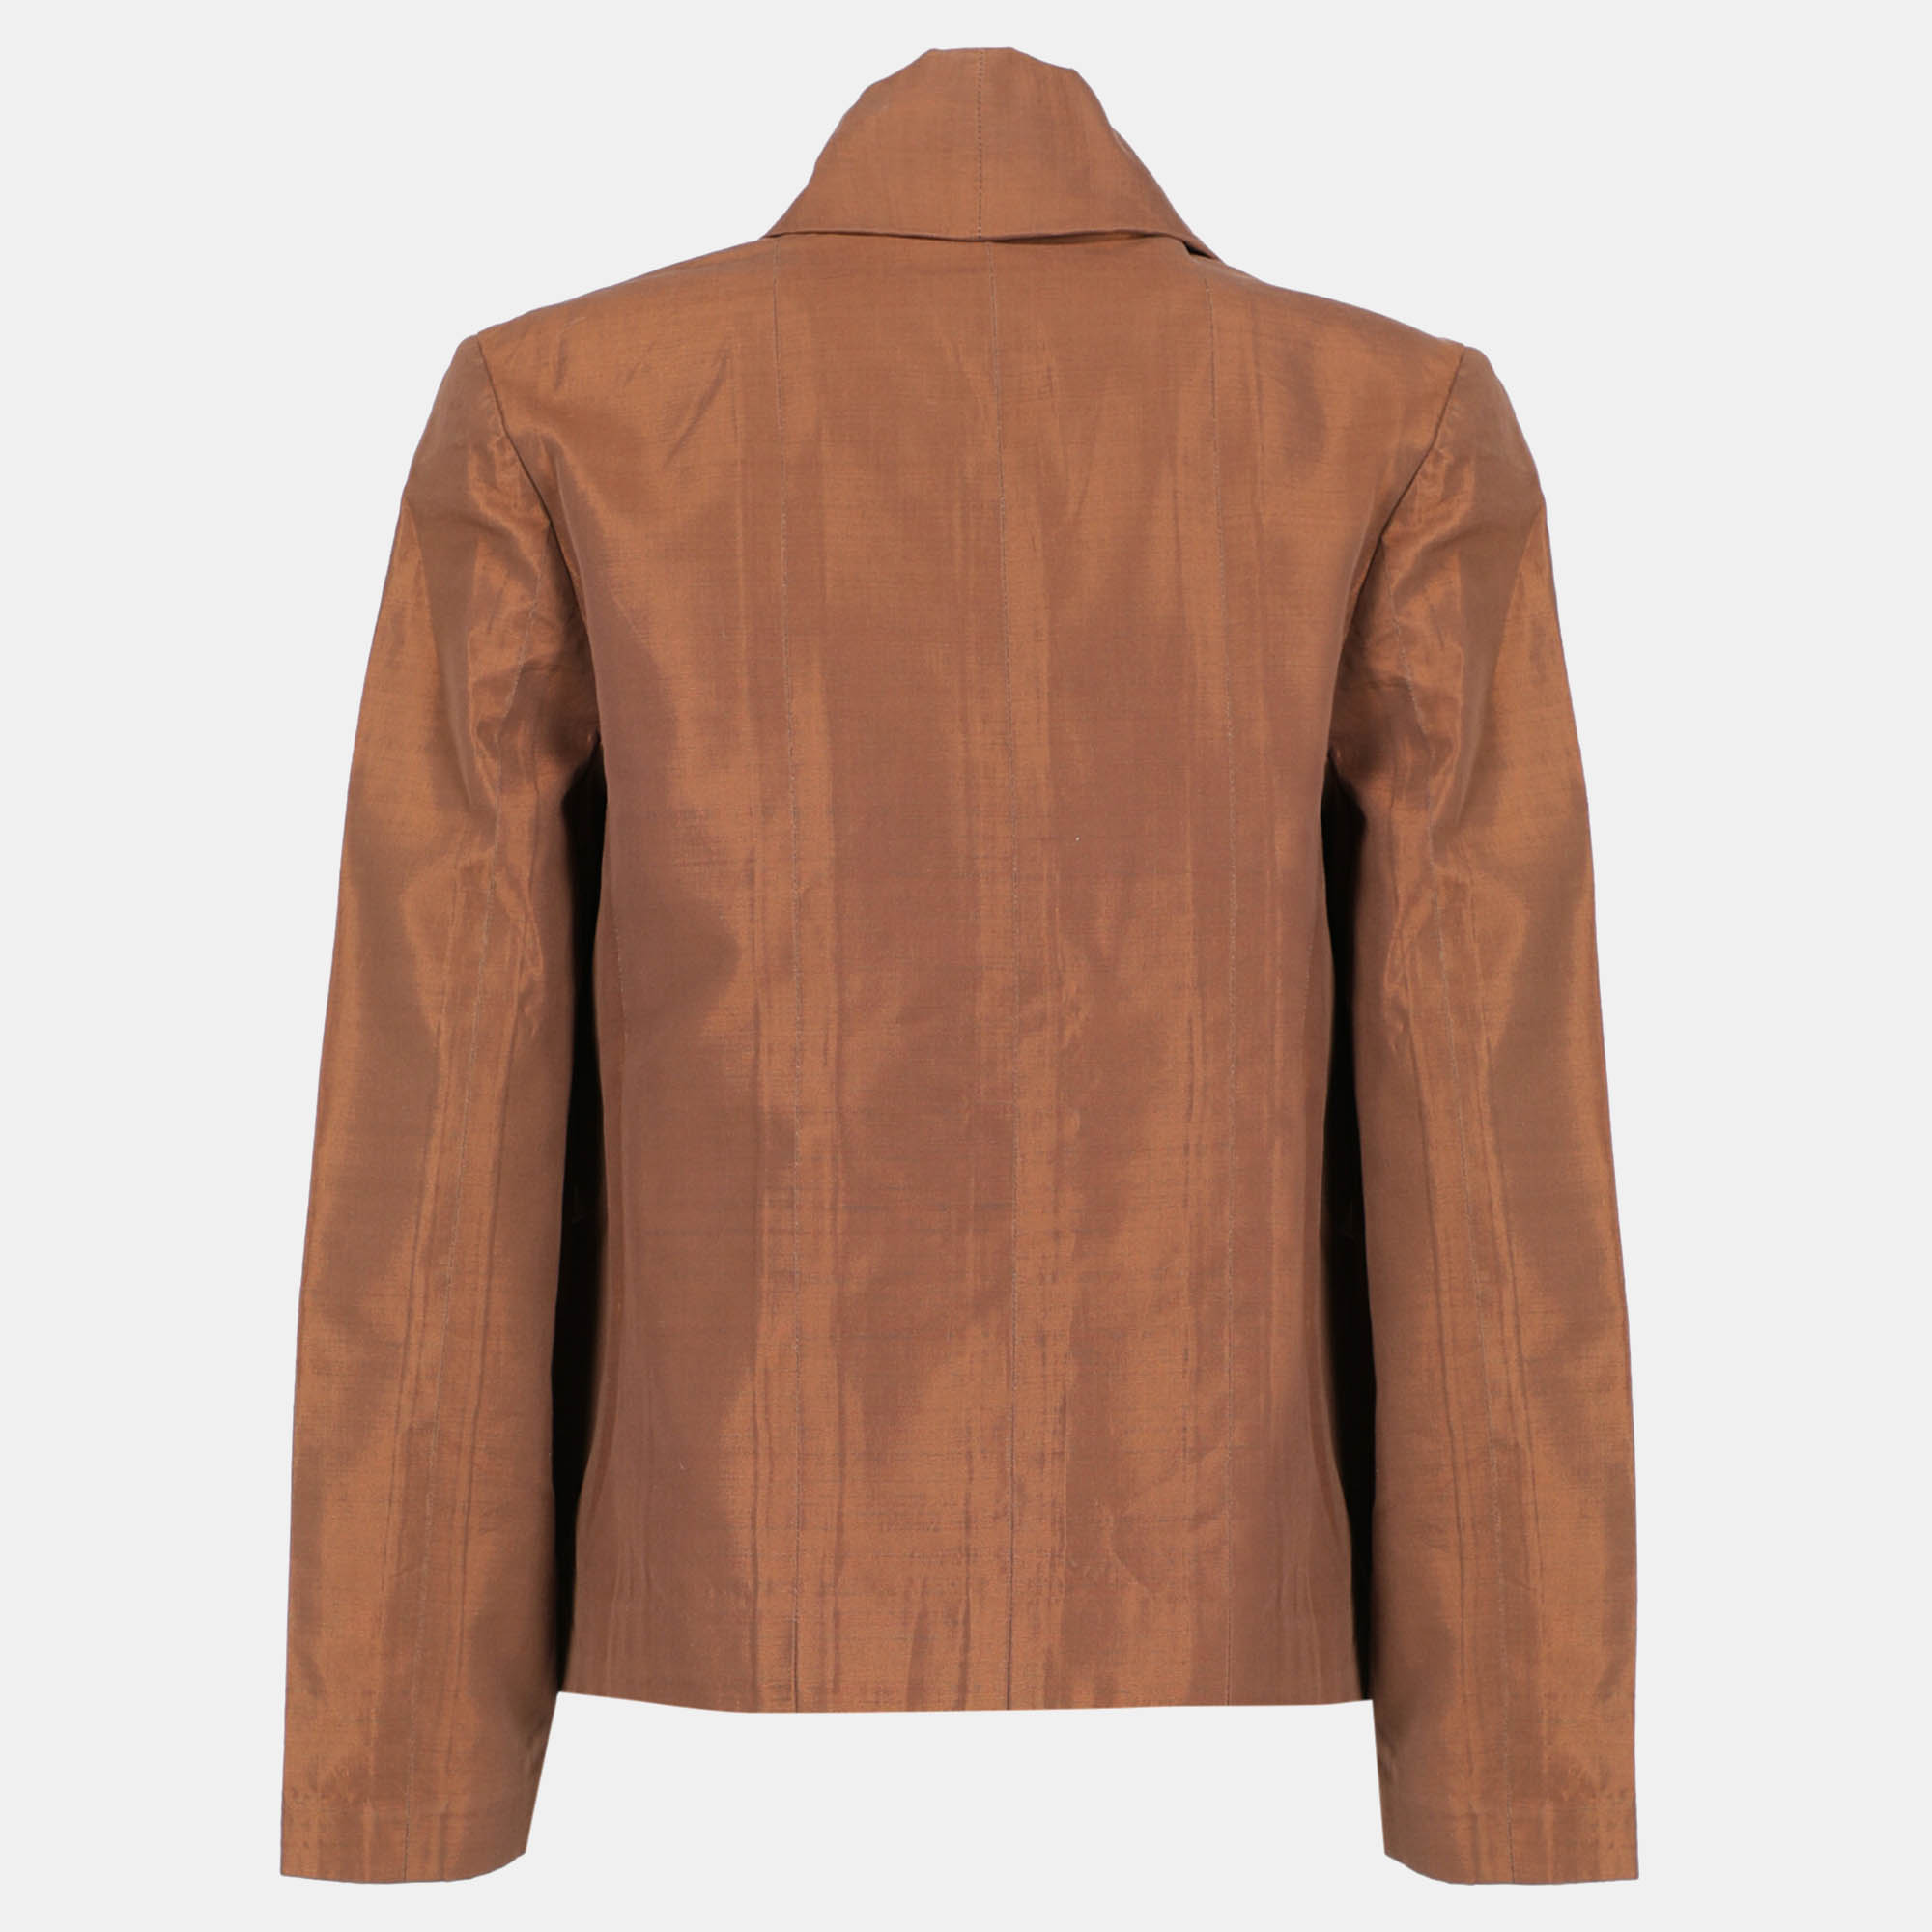 Chanel  Women's Cotton Jacket - Bronze - M